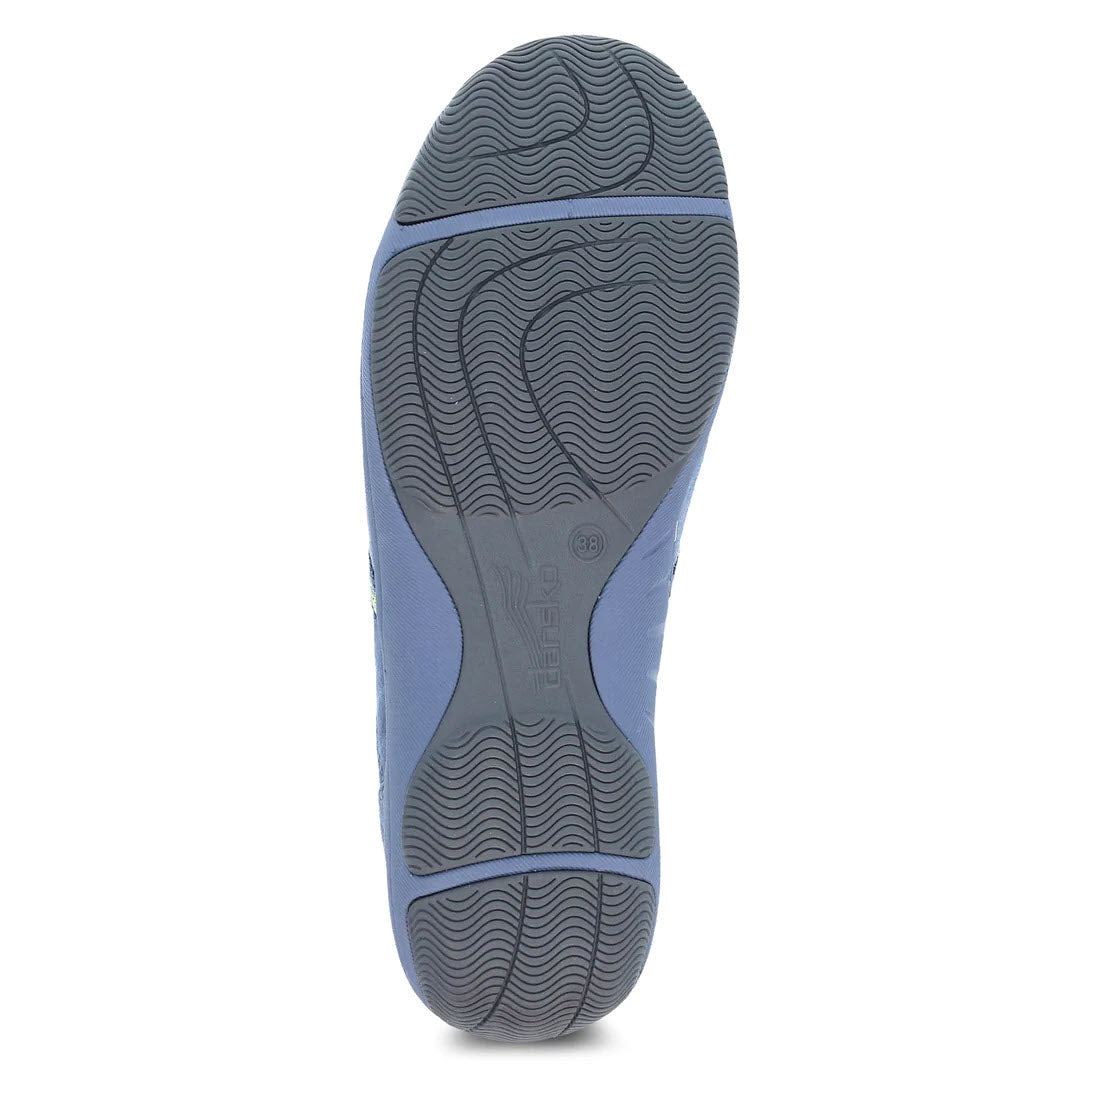 Sole of a blue Dansko Harlyn shoe with textured tread pattern.